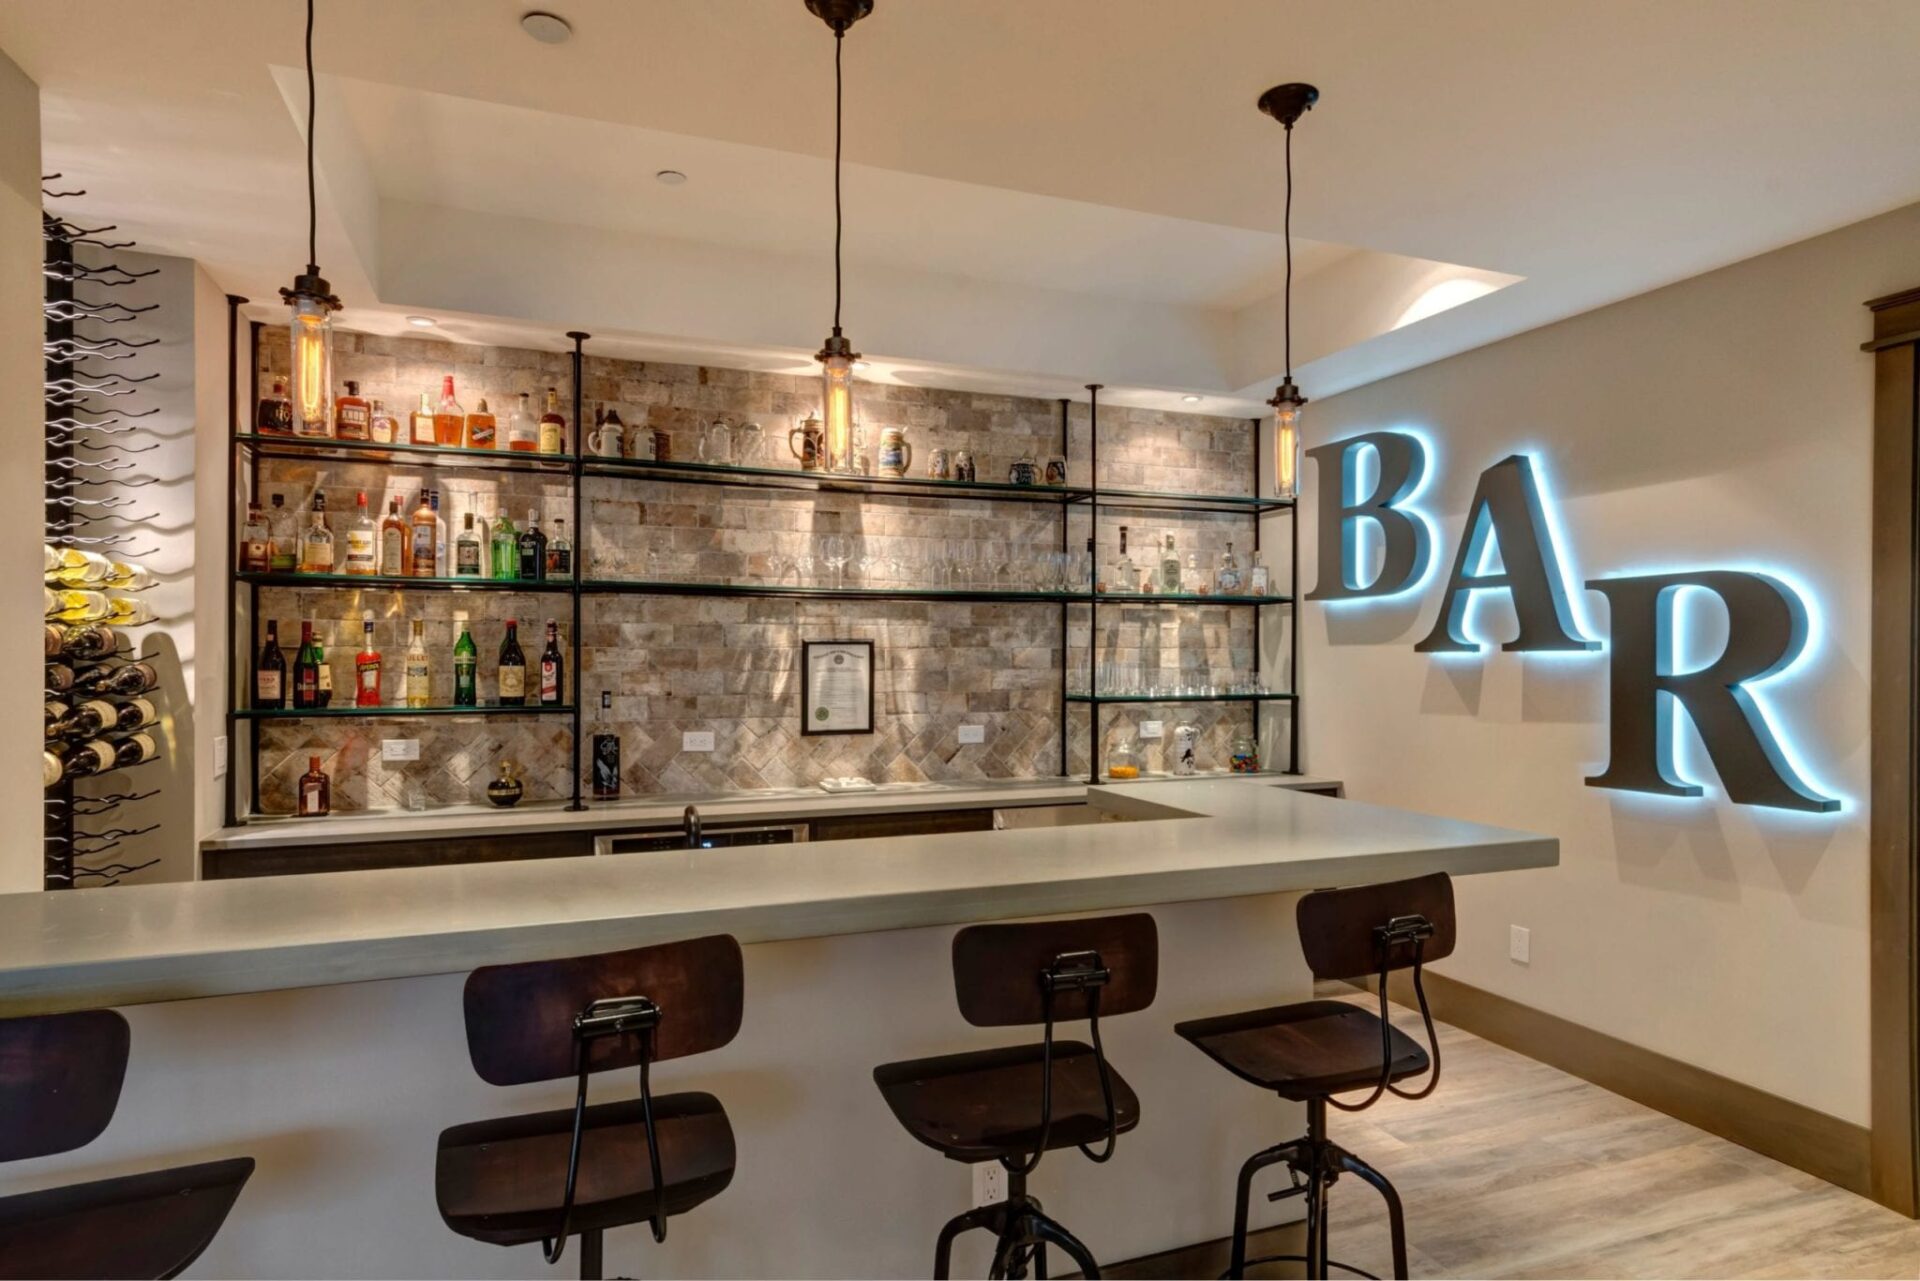 basement remodel wet bar | neon bar sign | open shelving liquor display